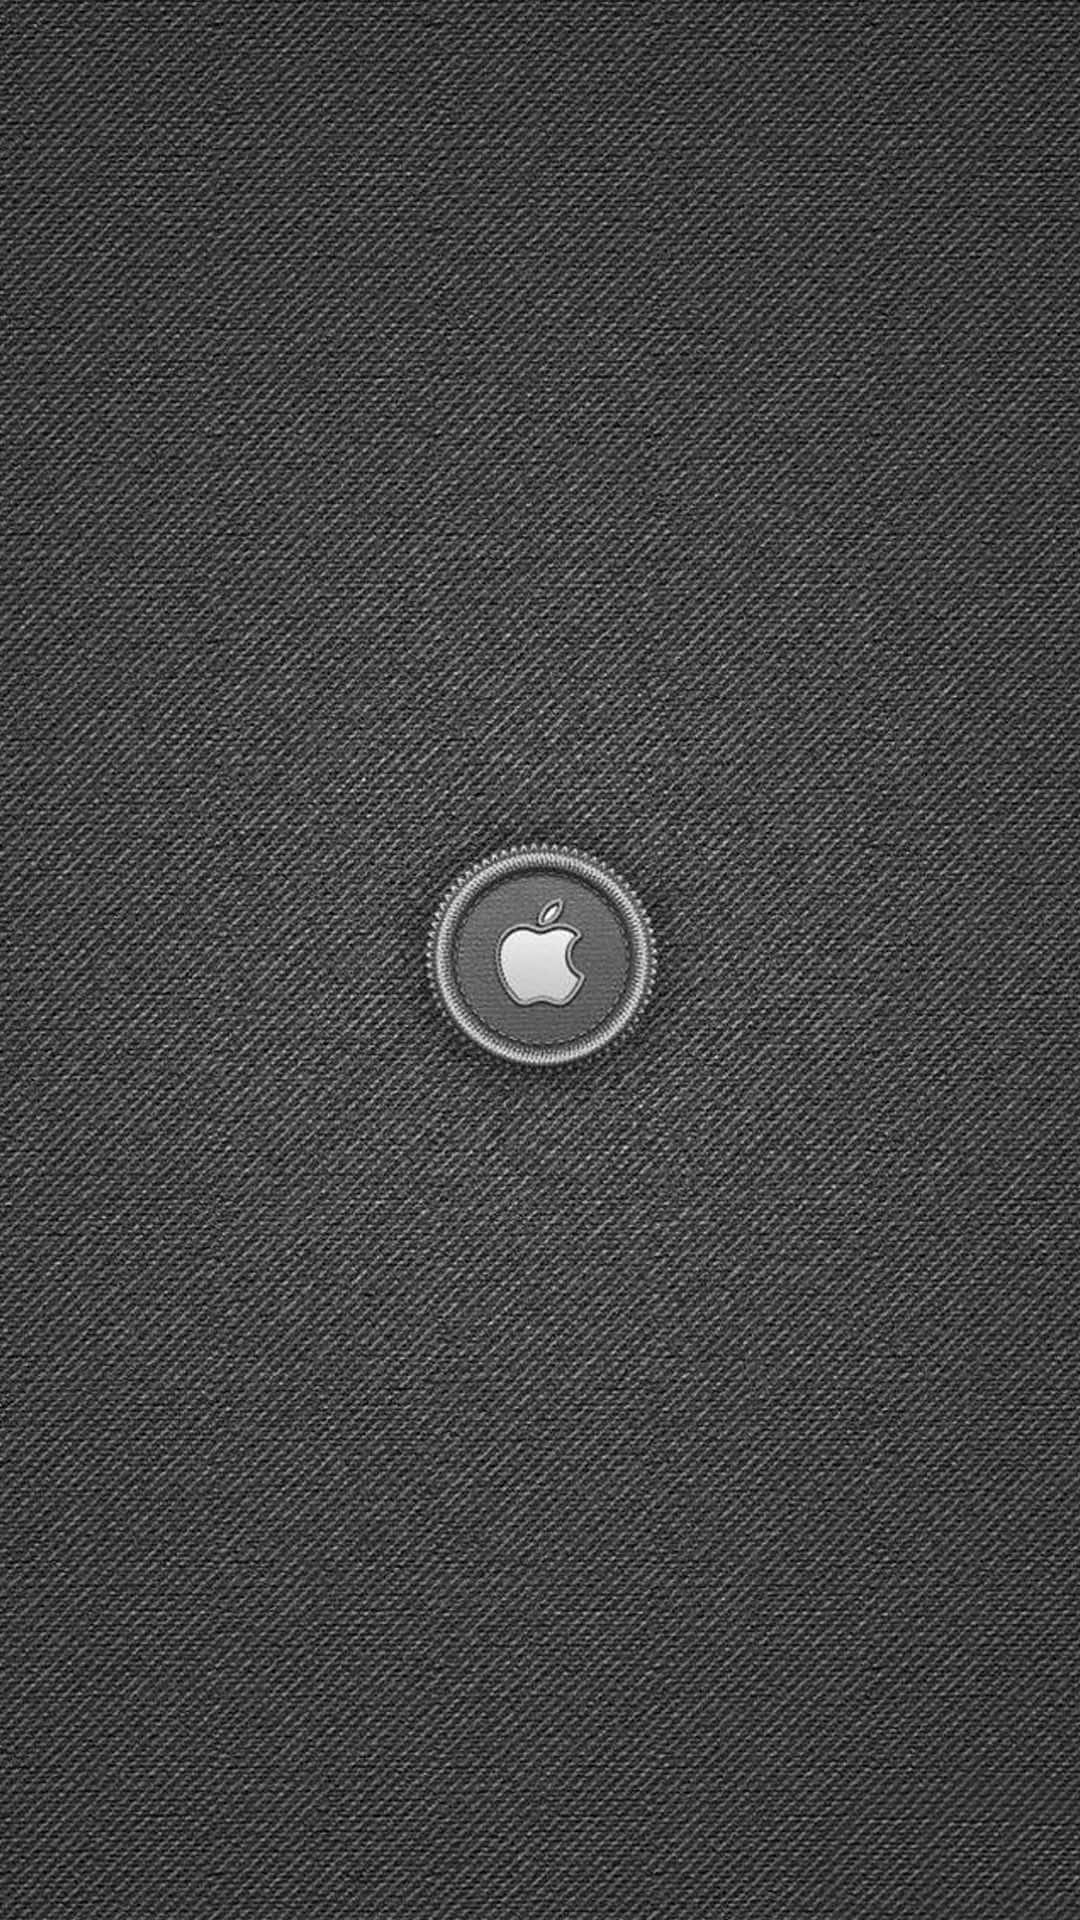 Interesting Iphone X Apple Background